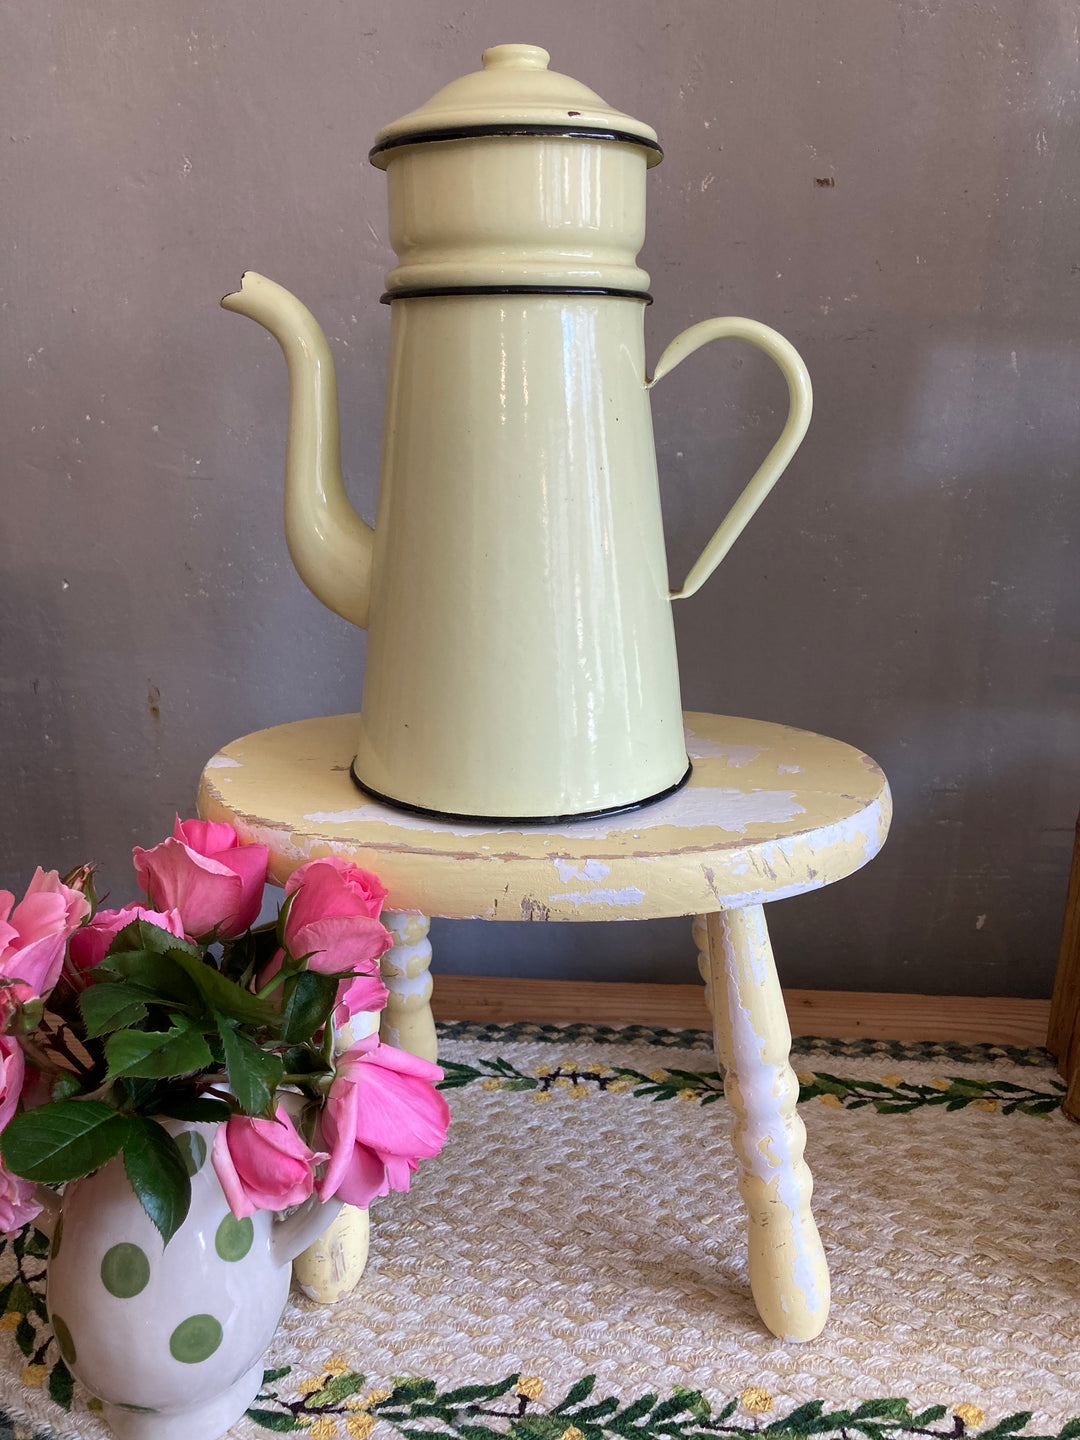 Yellow French Enamel Coffeepot on yellow stool